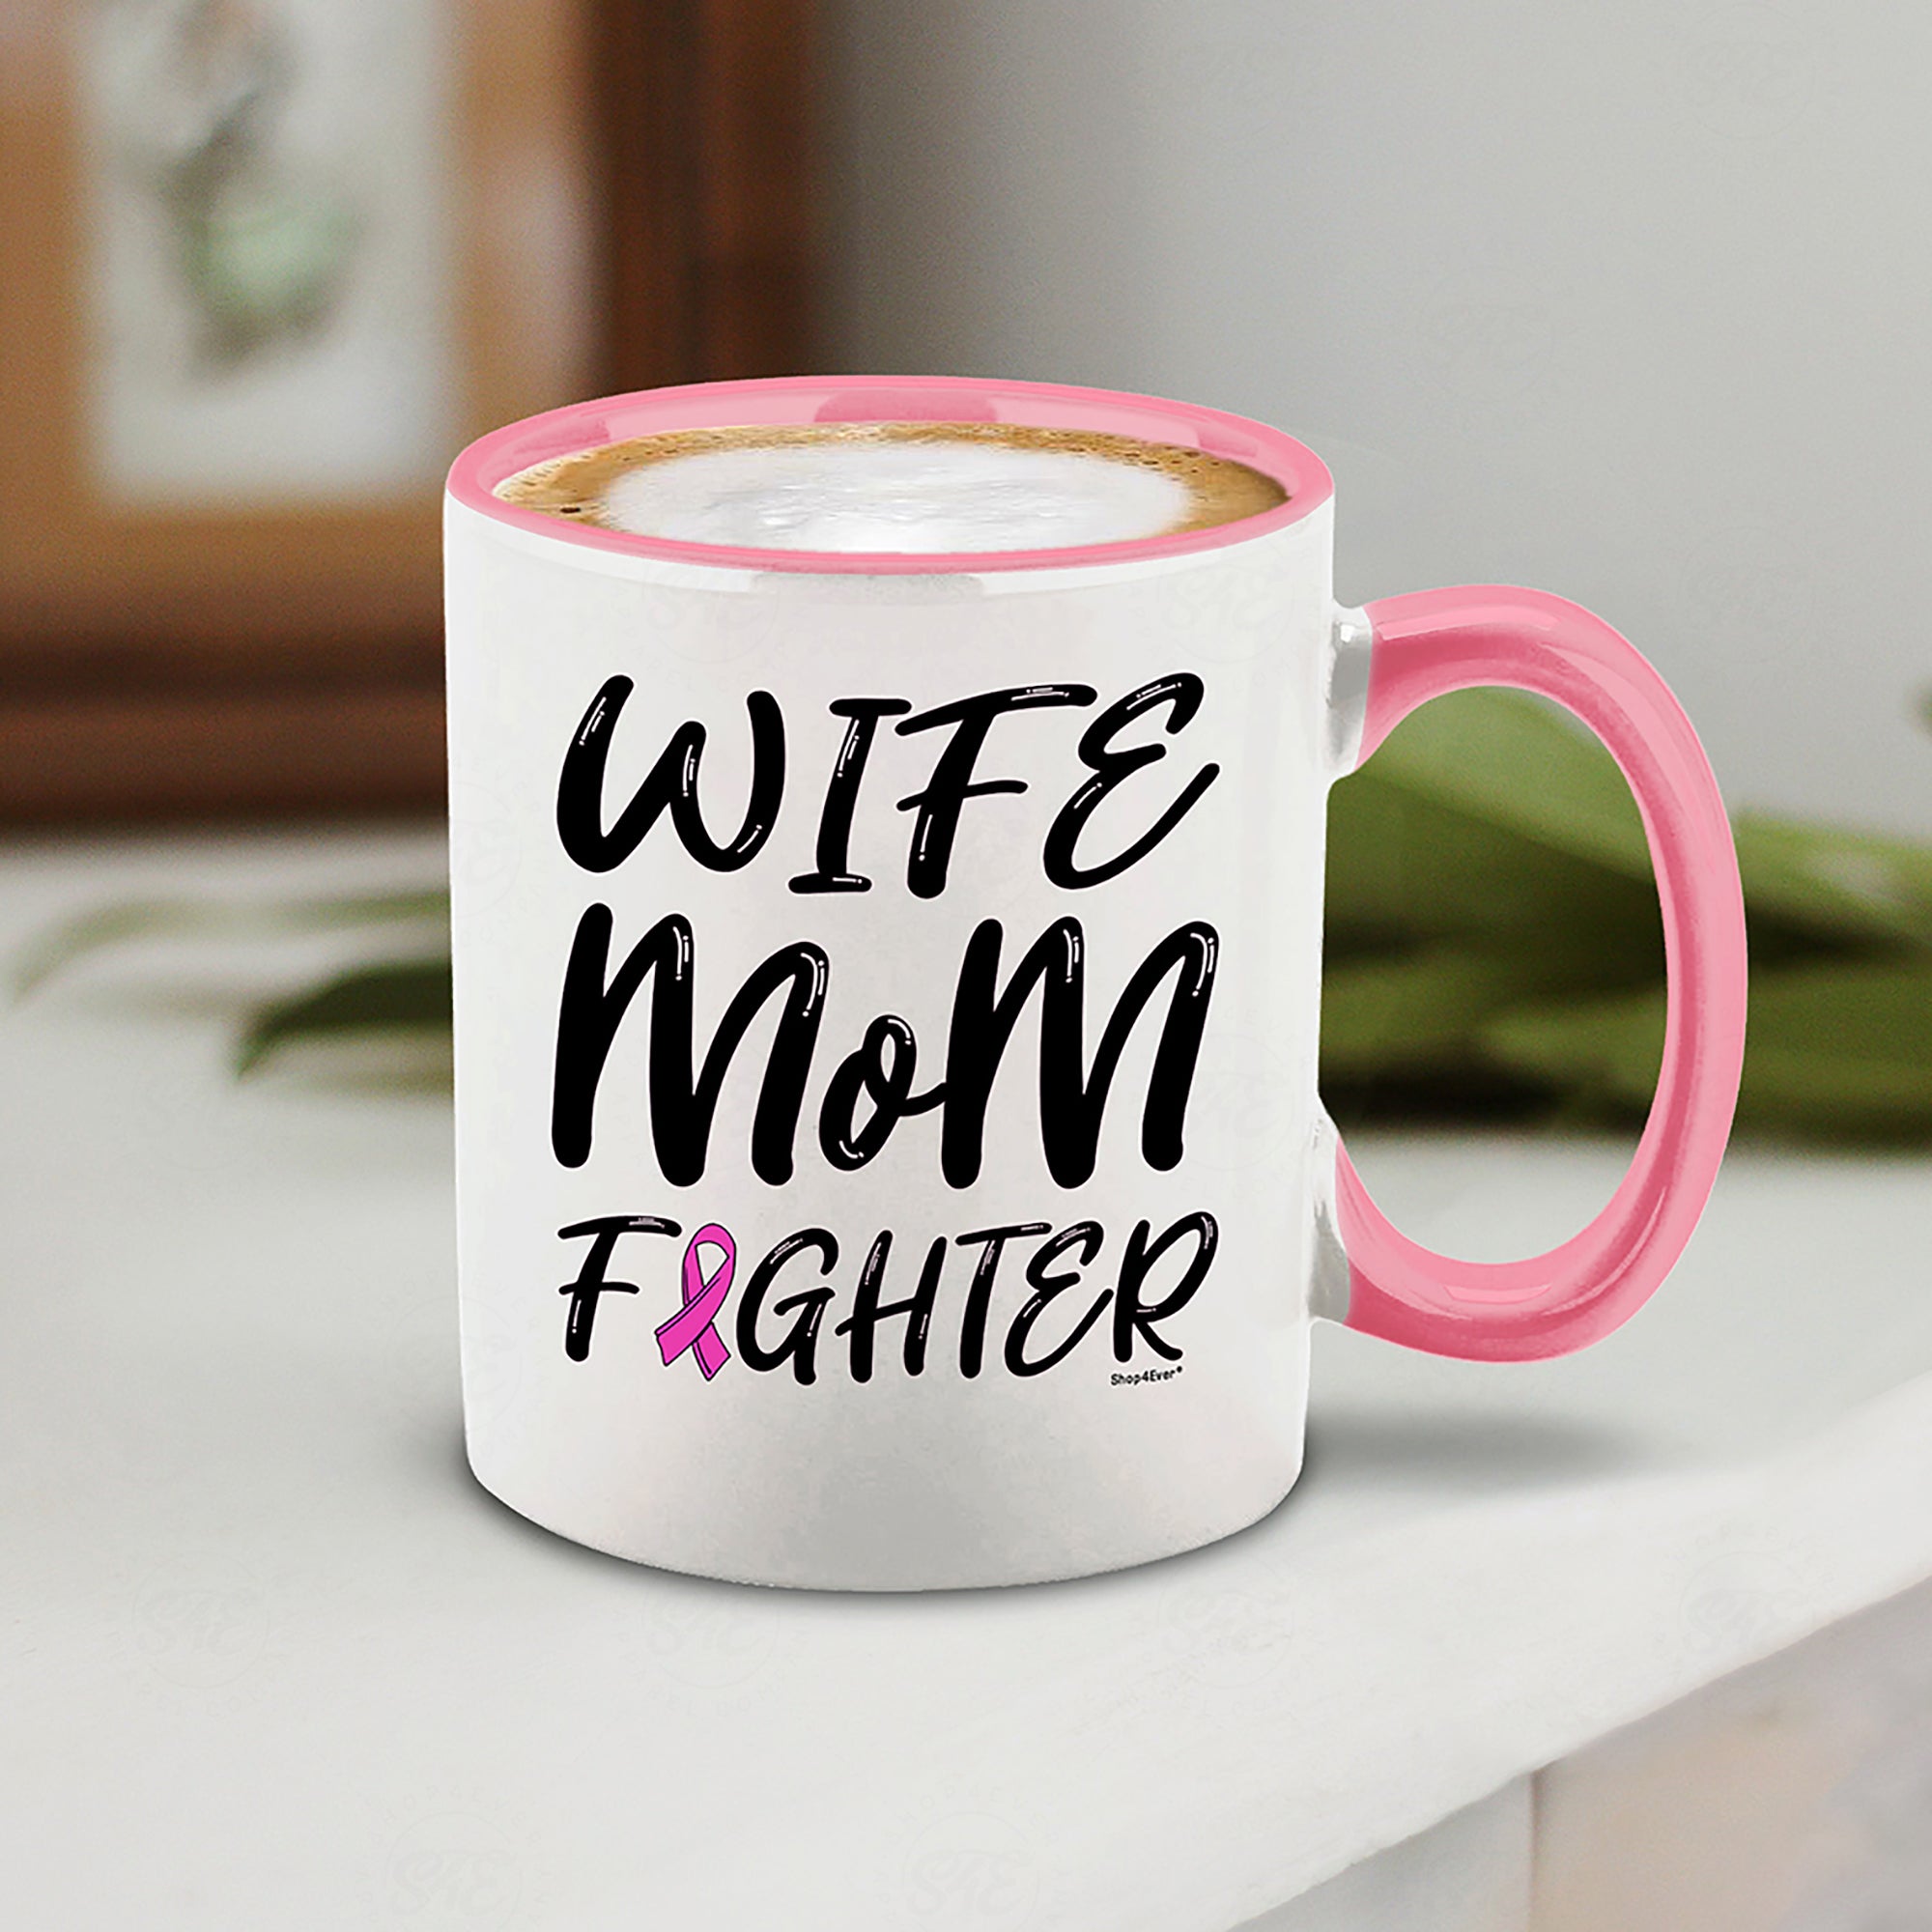 Wife Mom Fighter Pink Handle Ceramic Coffee Mug Tea Cup Pink Ribbon Breast Cancer Survivor Awareness